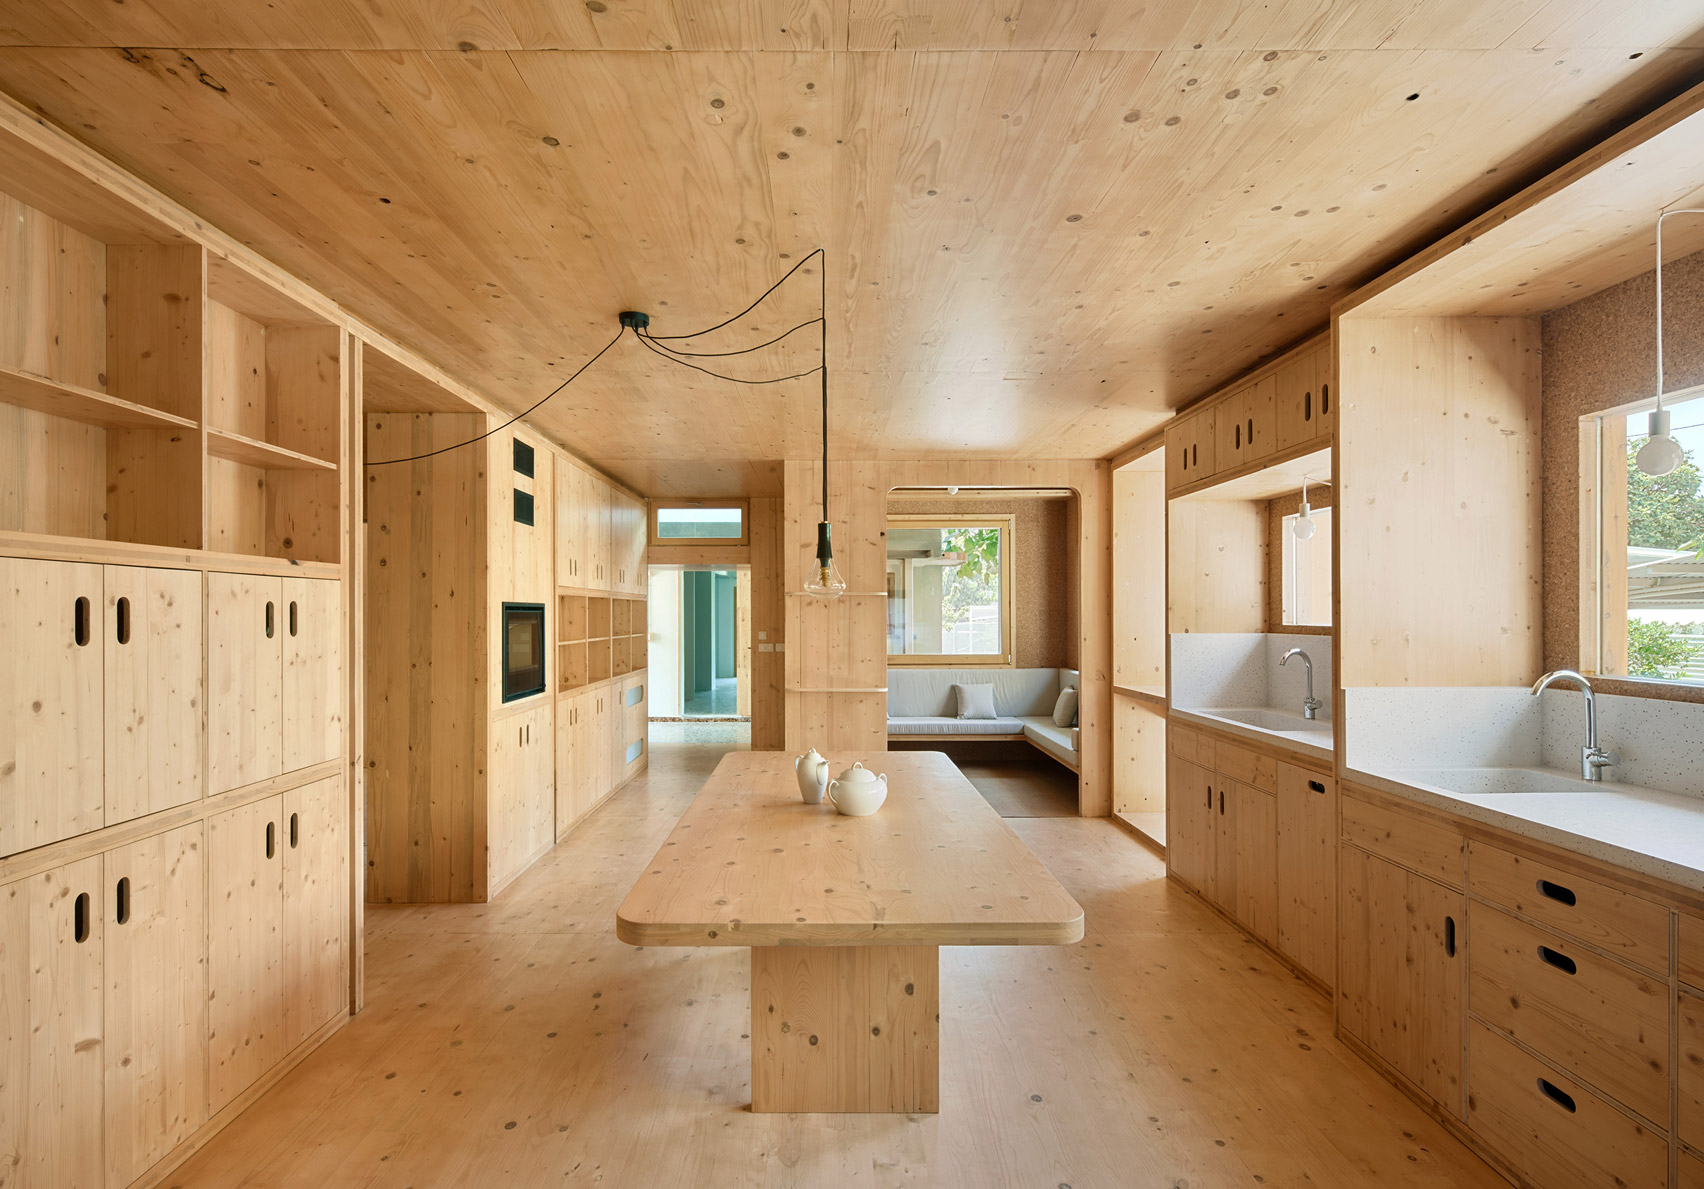 A cross laminated timber kitchen interior